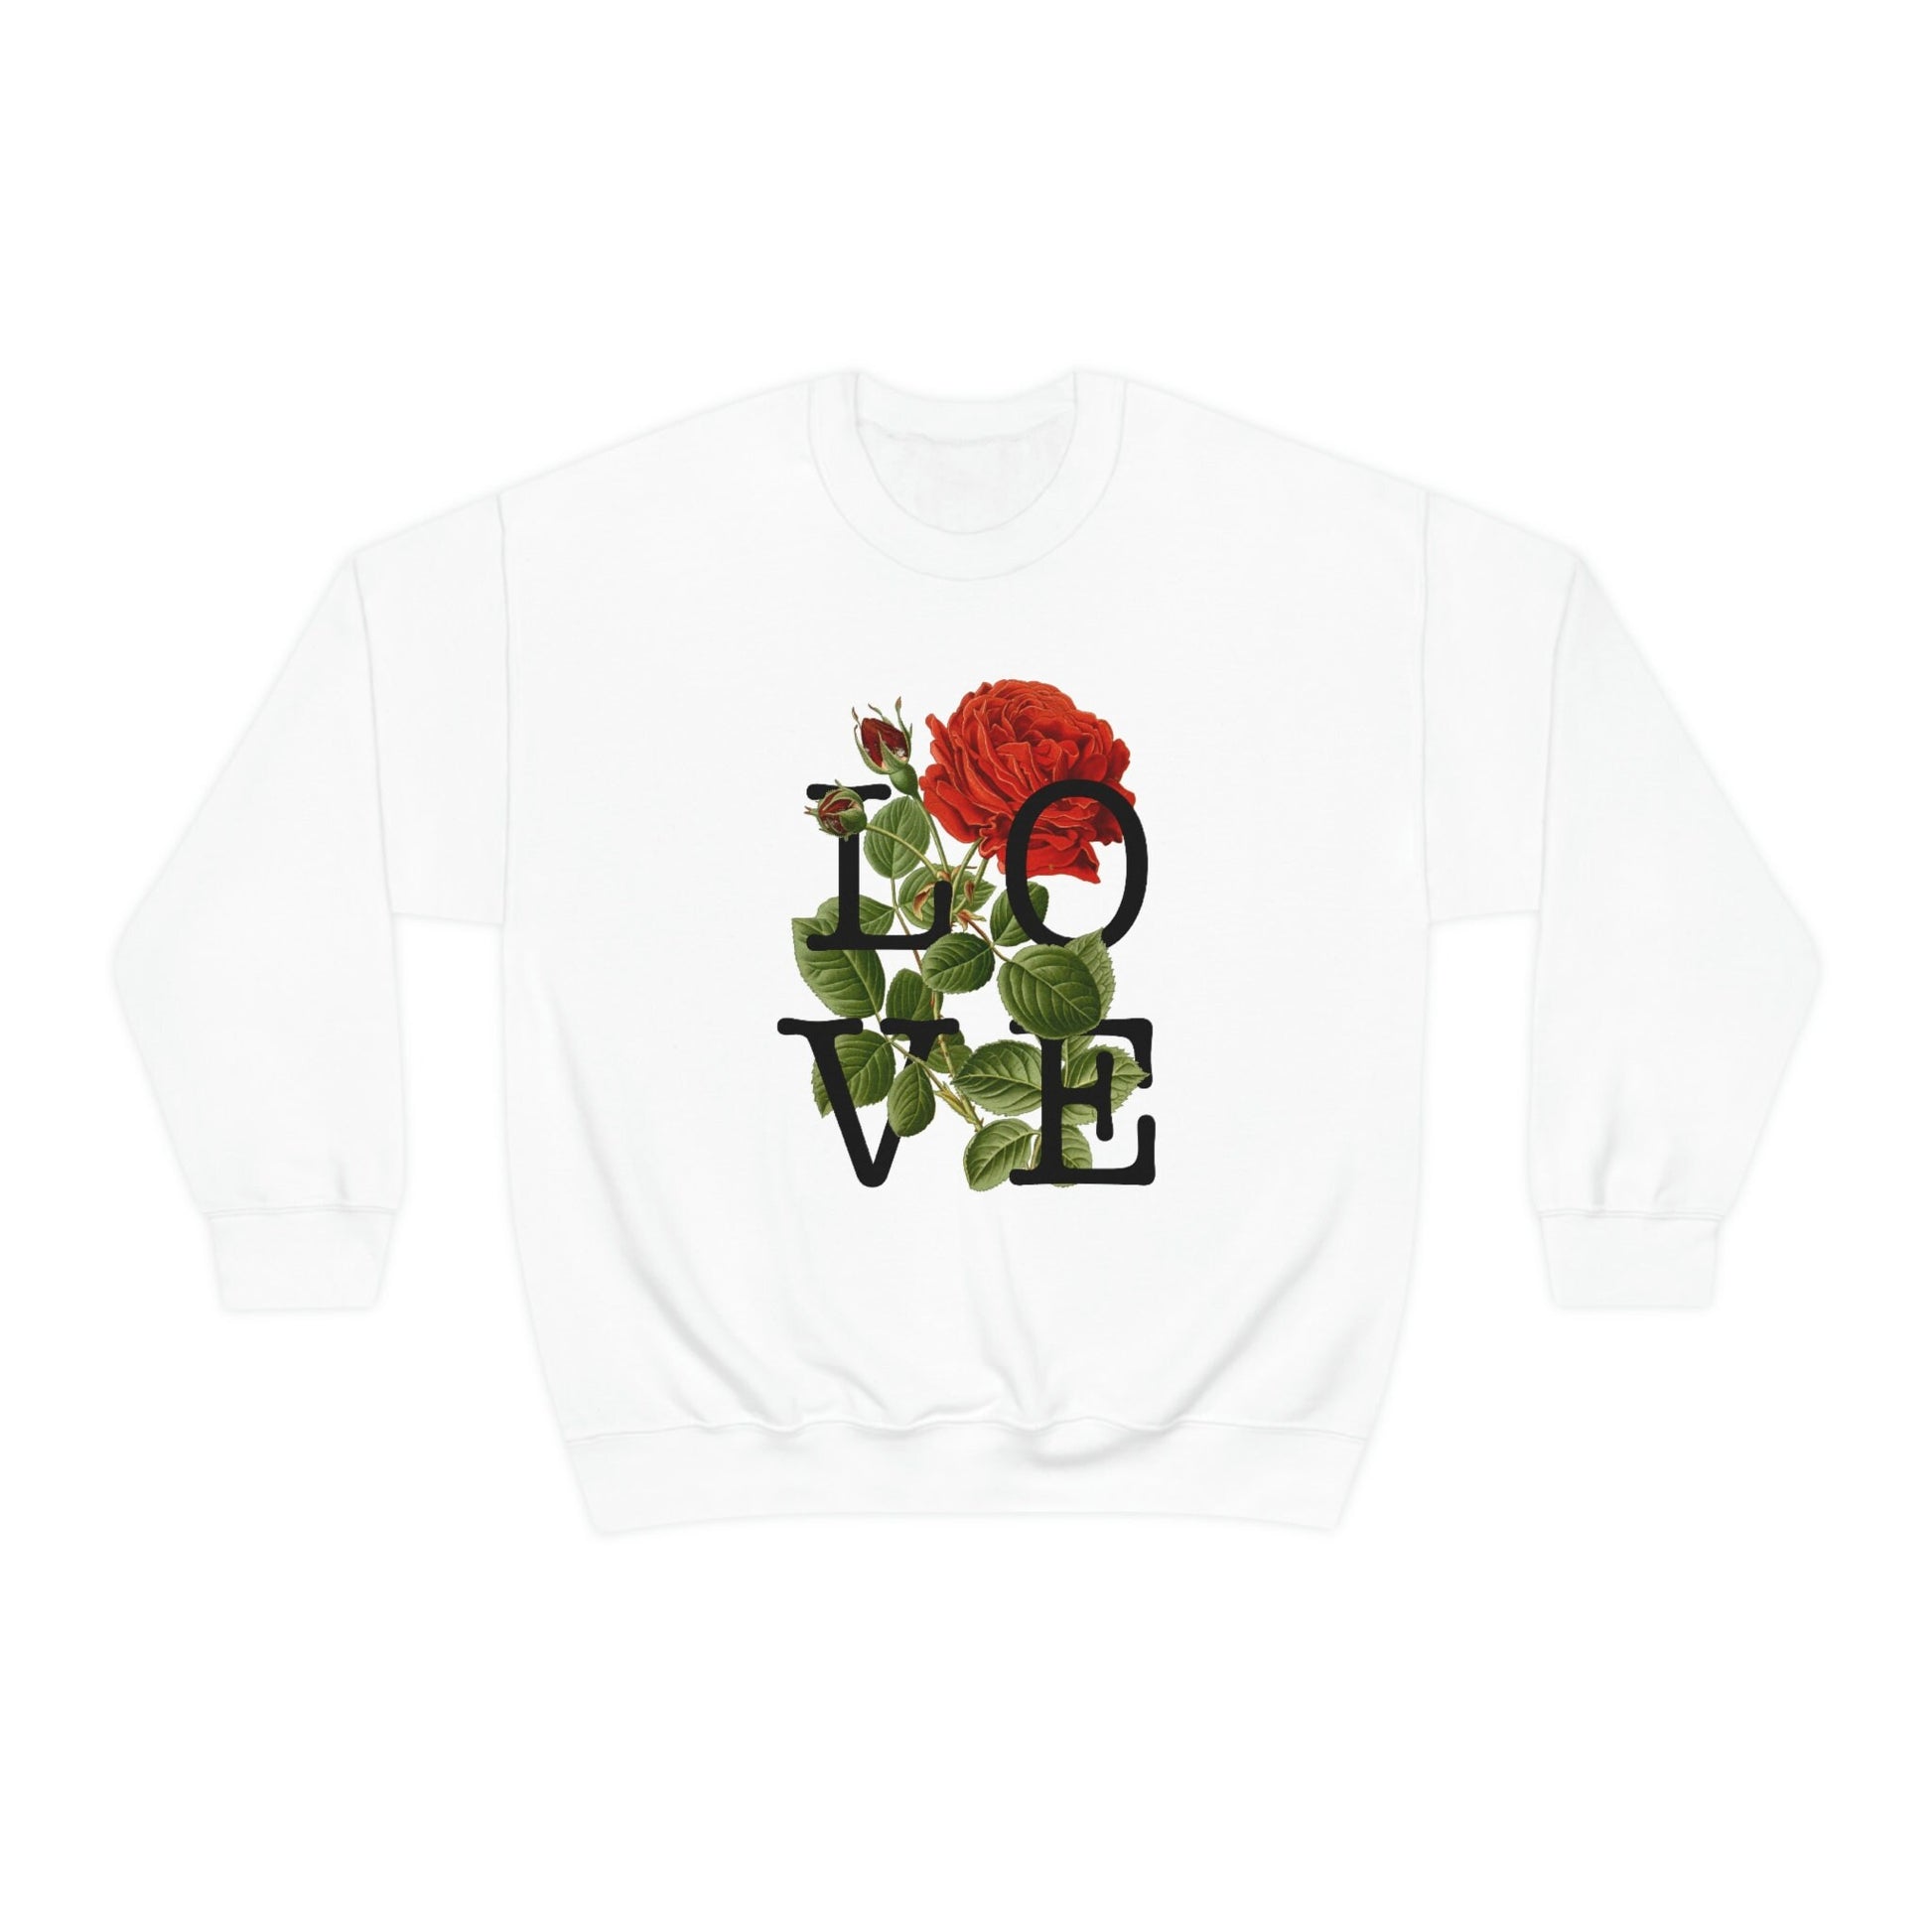 Rose Love Valentine's Day Sweatshirt Cottage Core Clothes Cottagecore Sweatshirt Soft Goth Fairy Grunge Love Boho Botanical Flower Shirt